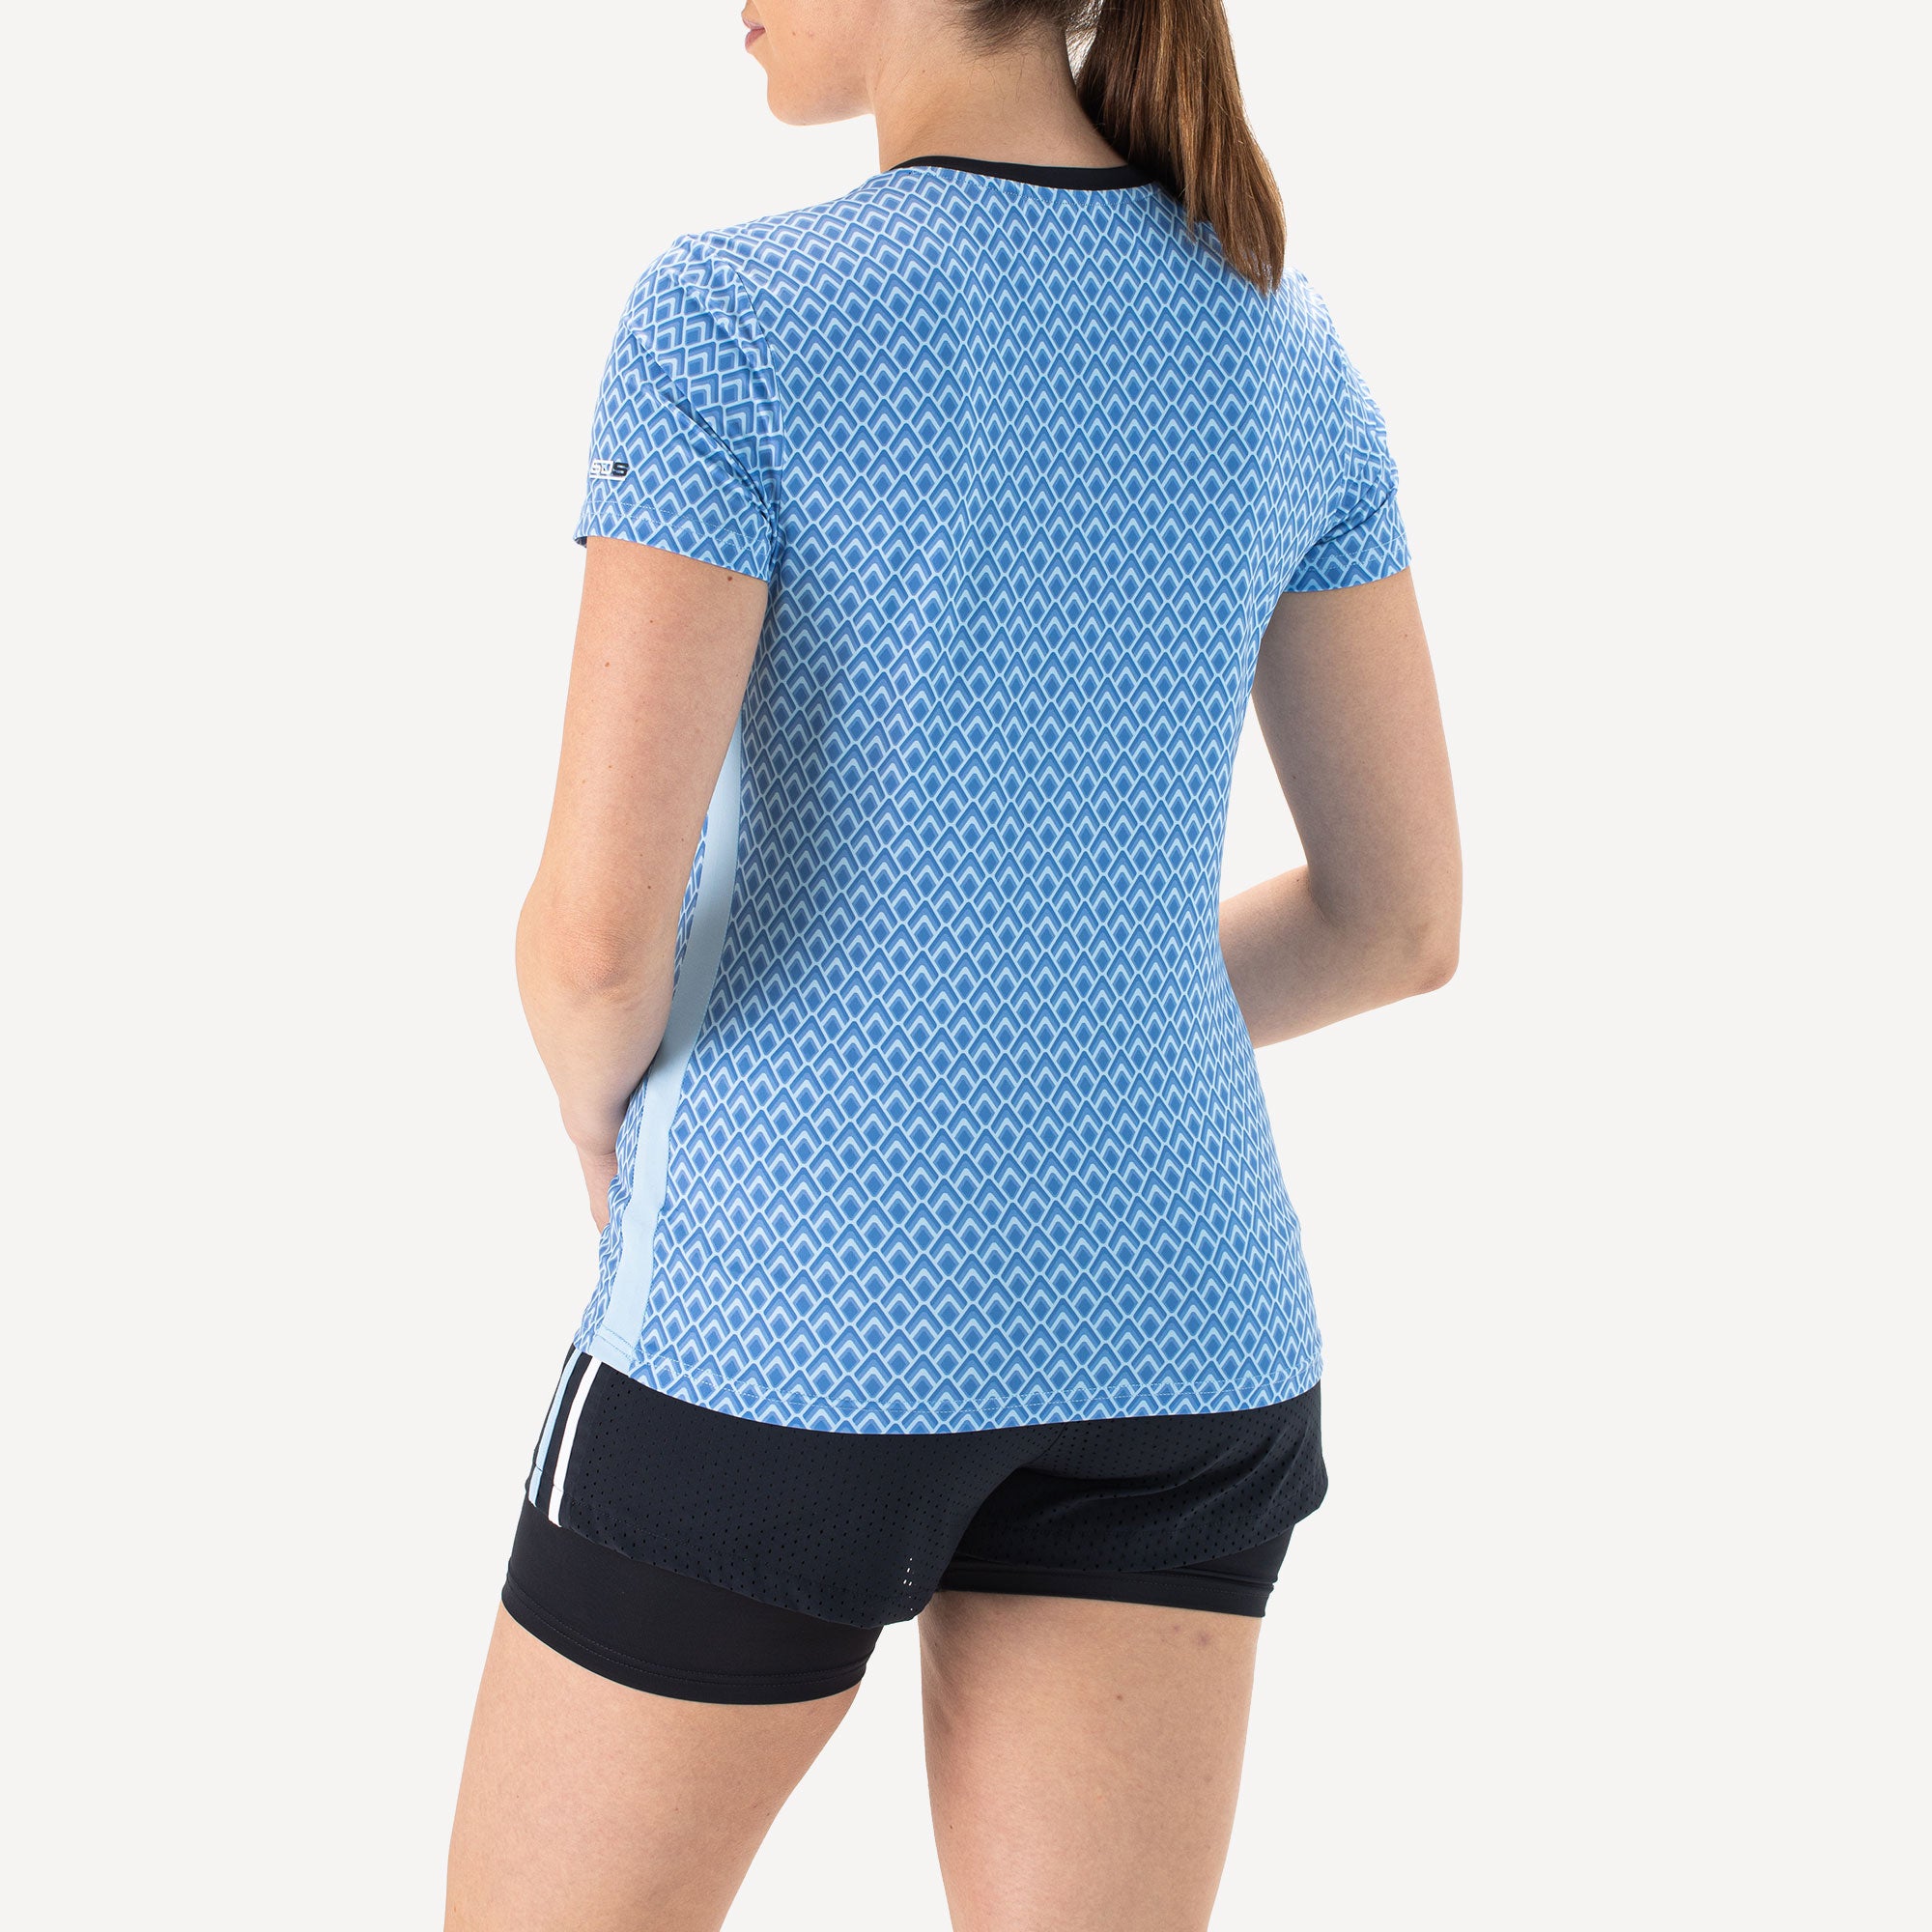 Sjeng Sports Inge Women's Tennis Shirt - Blue (2)